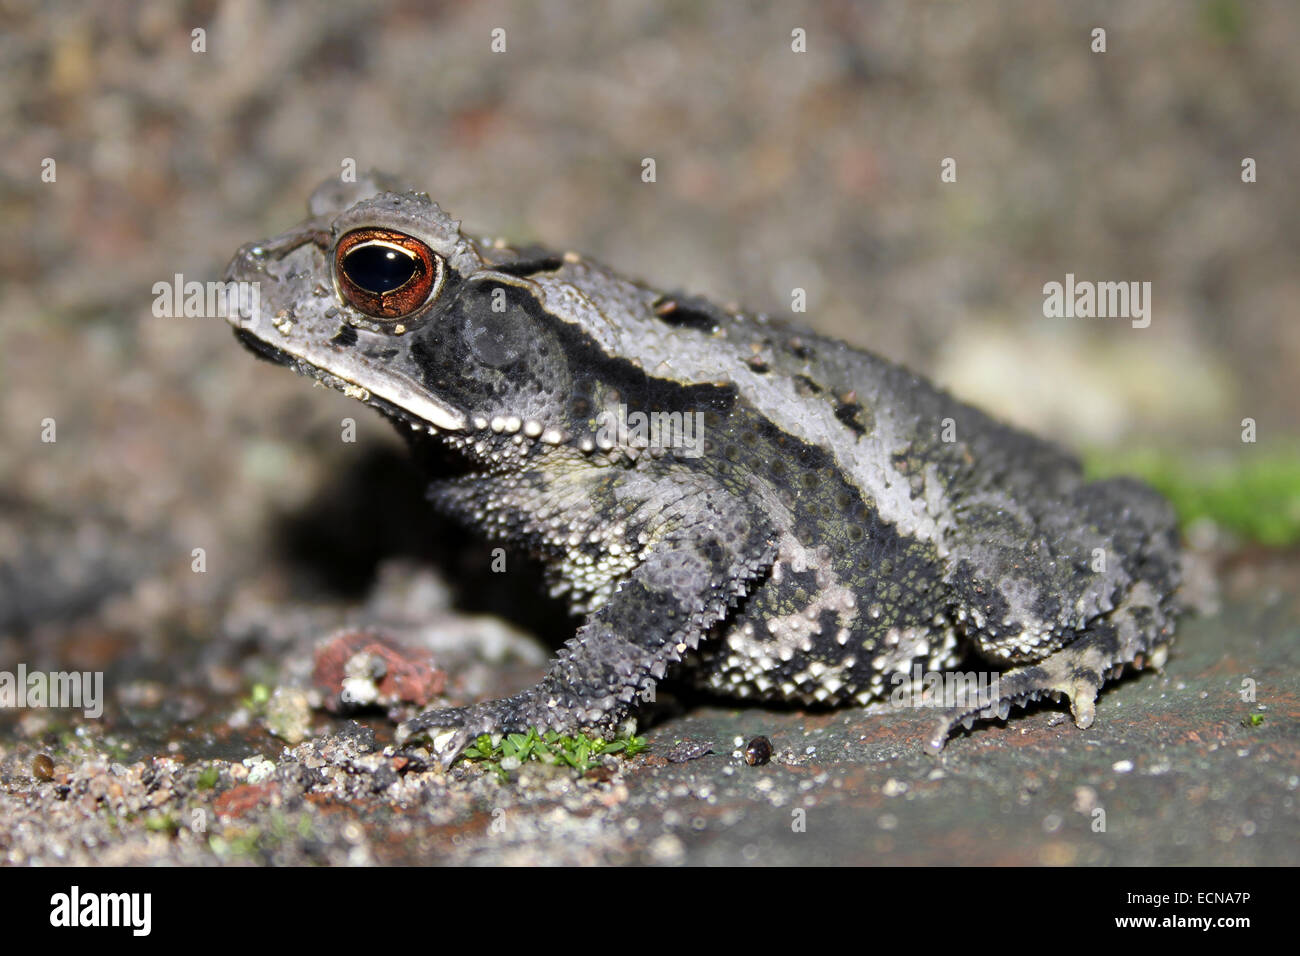 Campbell's Rainforest Toad Incilius campbelli Stock Photo